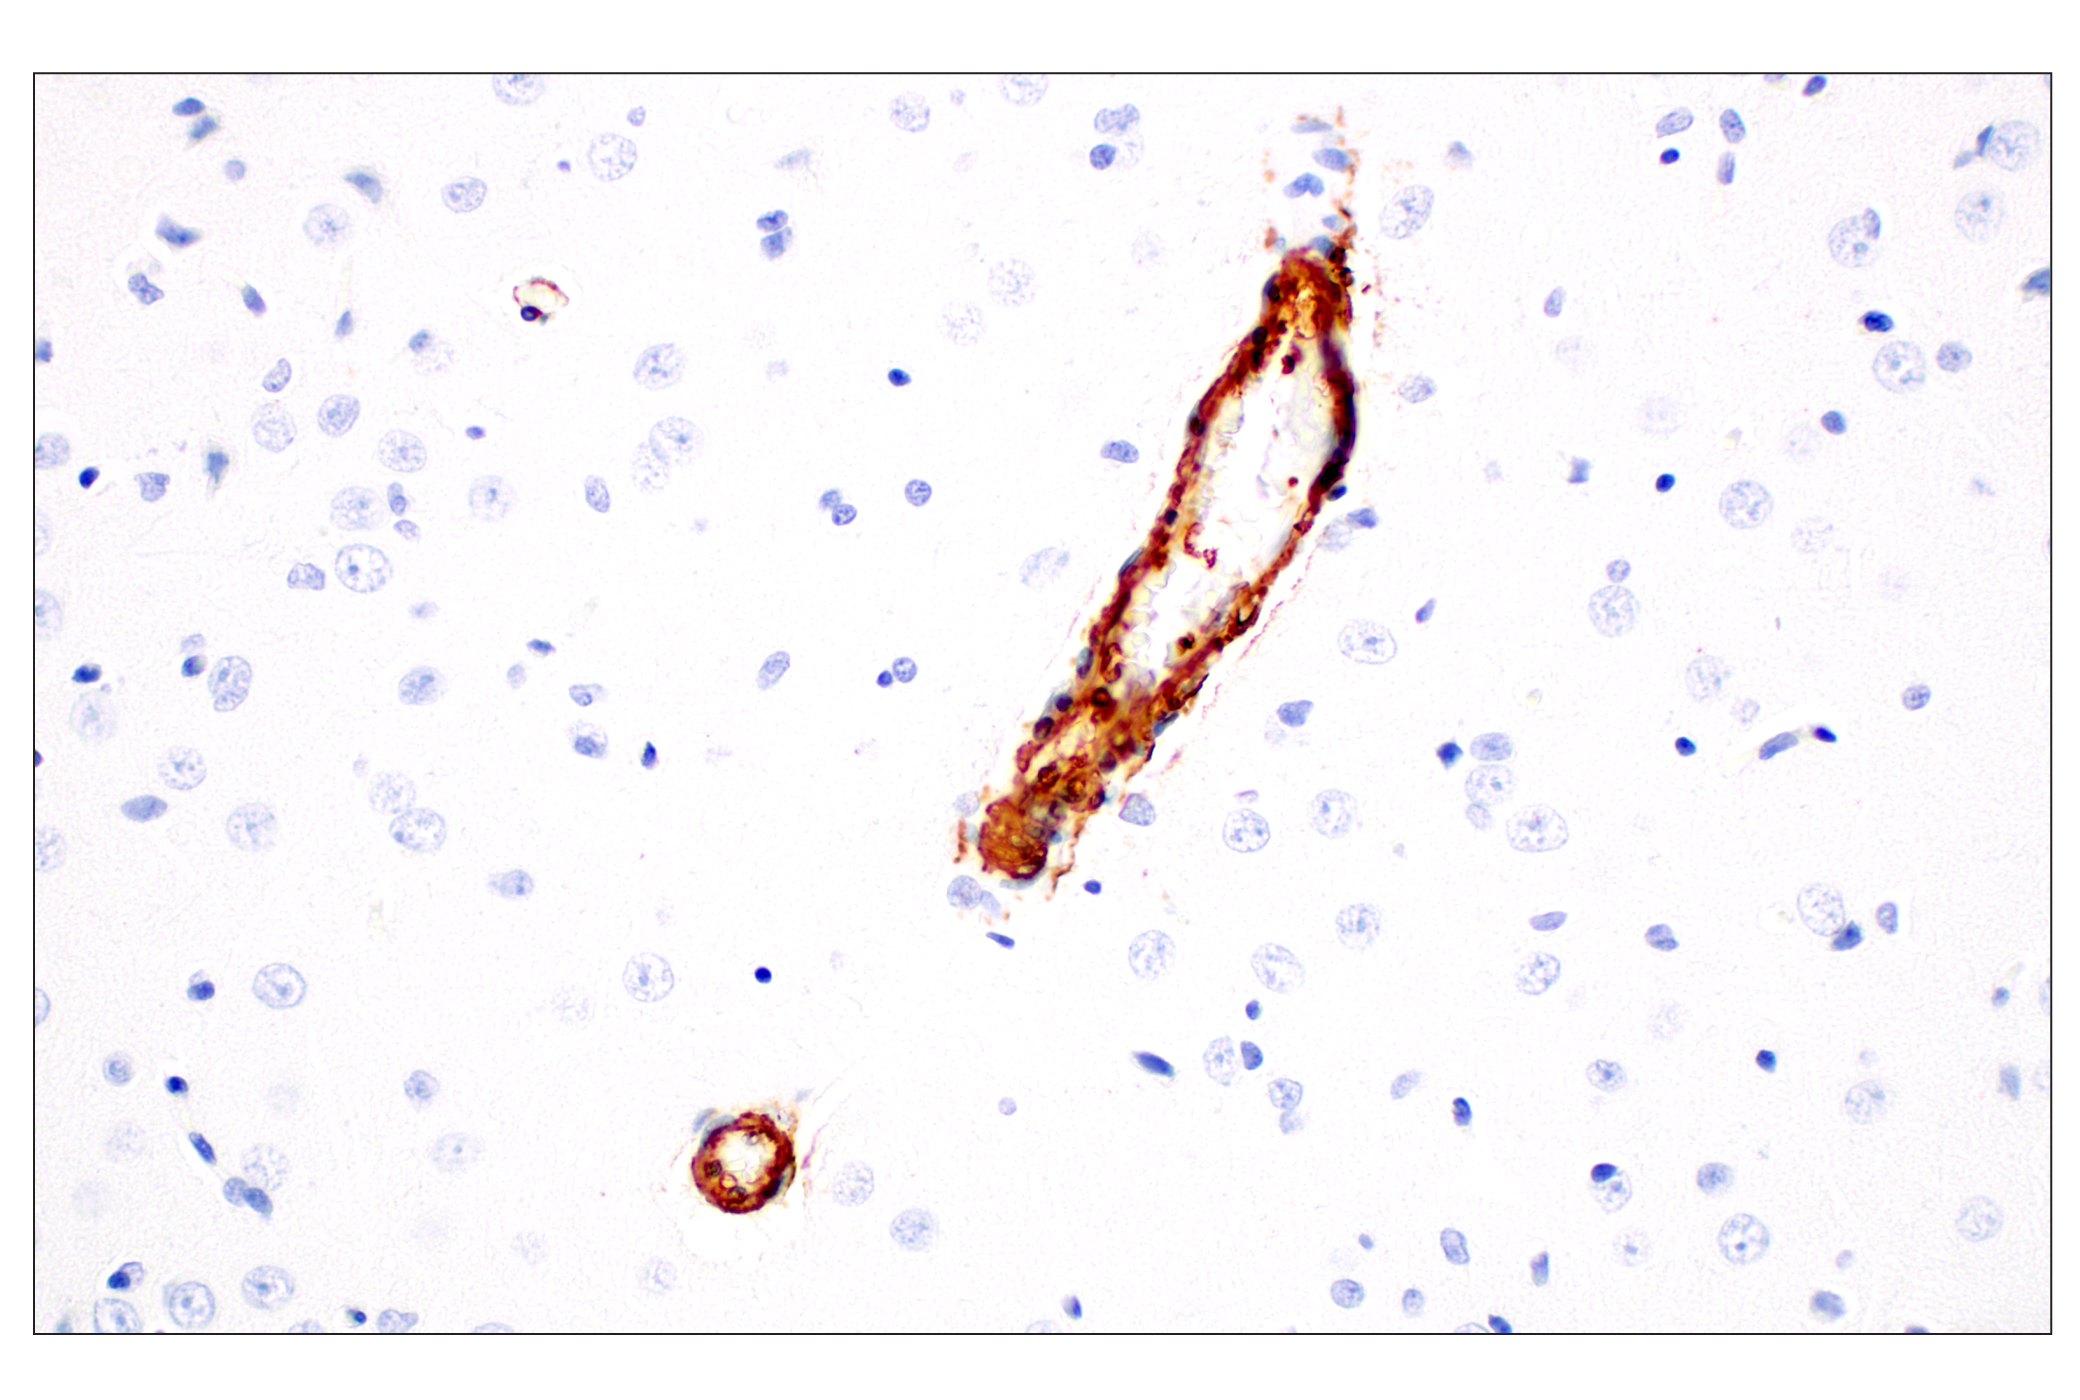  Image 57: Cancer Associated Fibroblast Marker Antibody Sampler Kit